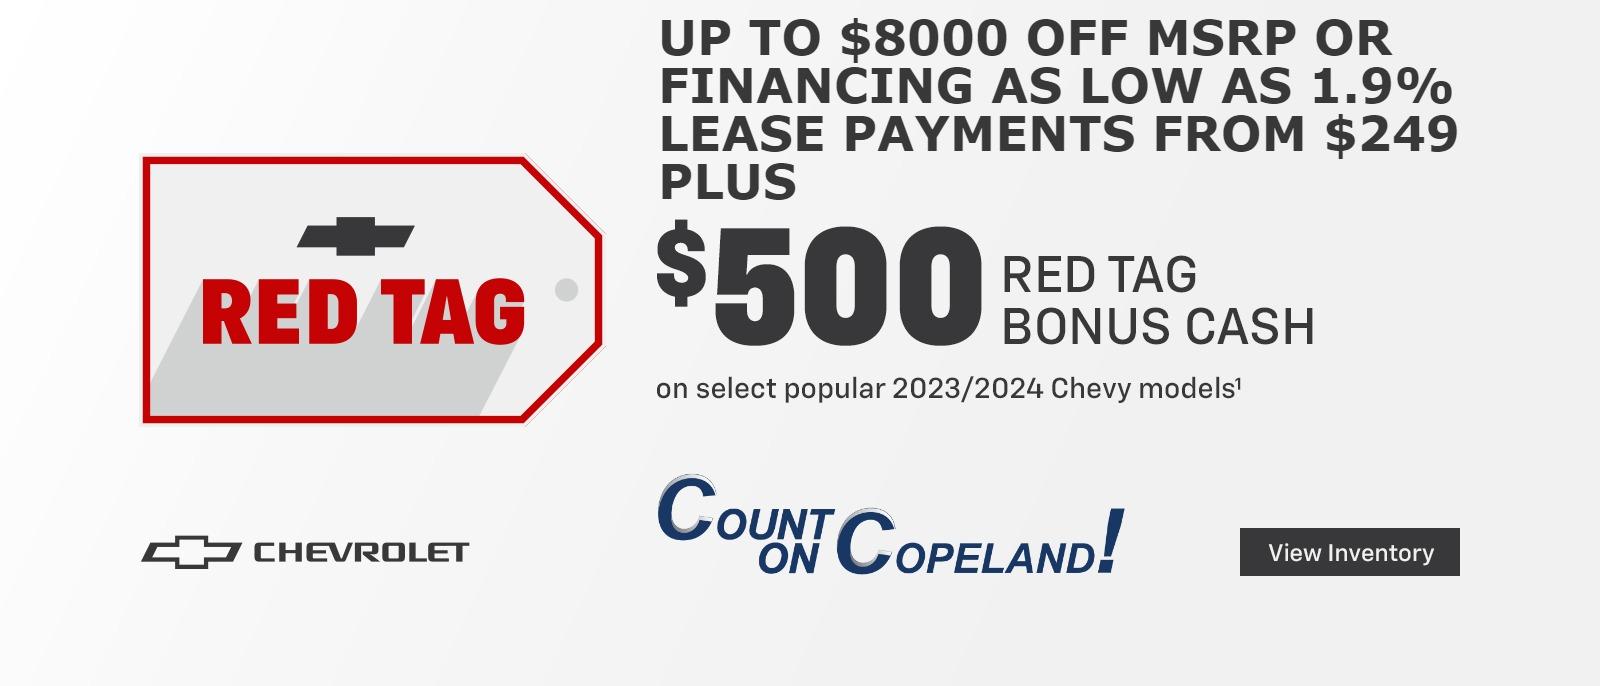 $500 Red Tag bonus cash on select popular 2023/2024 Chevy models.